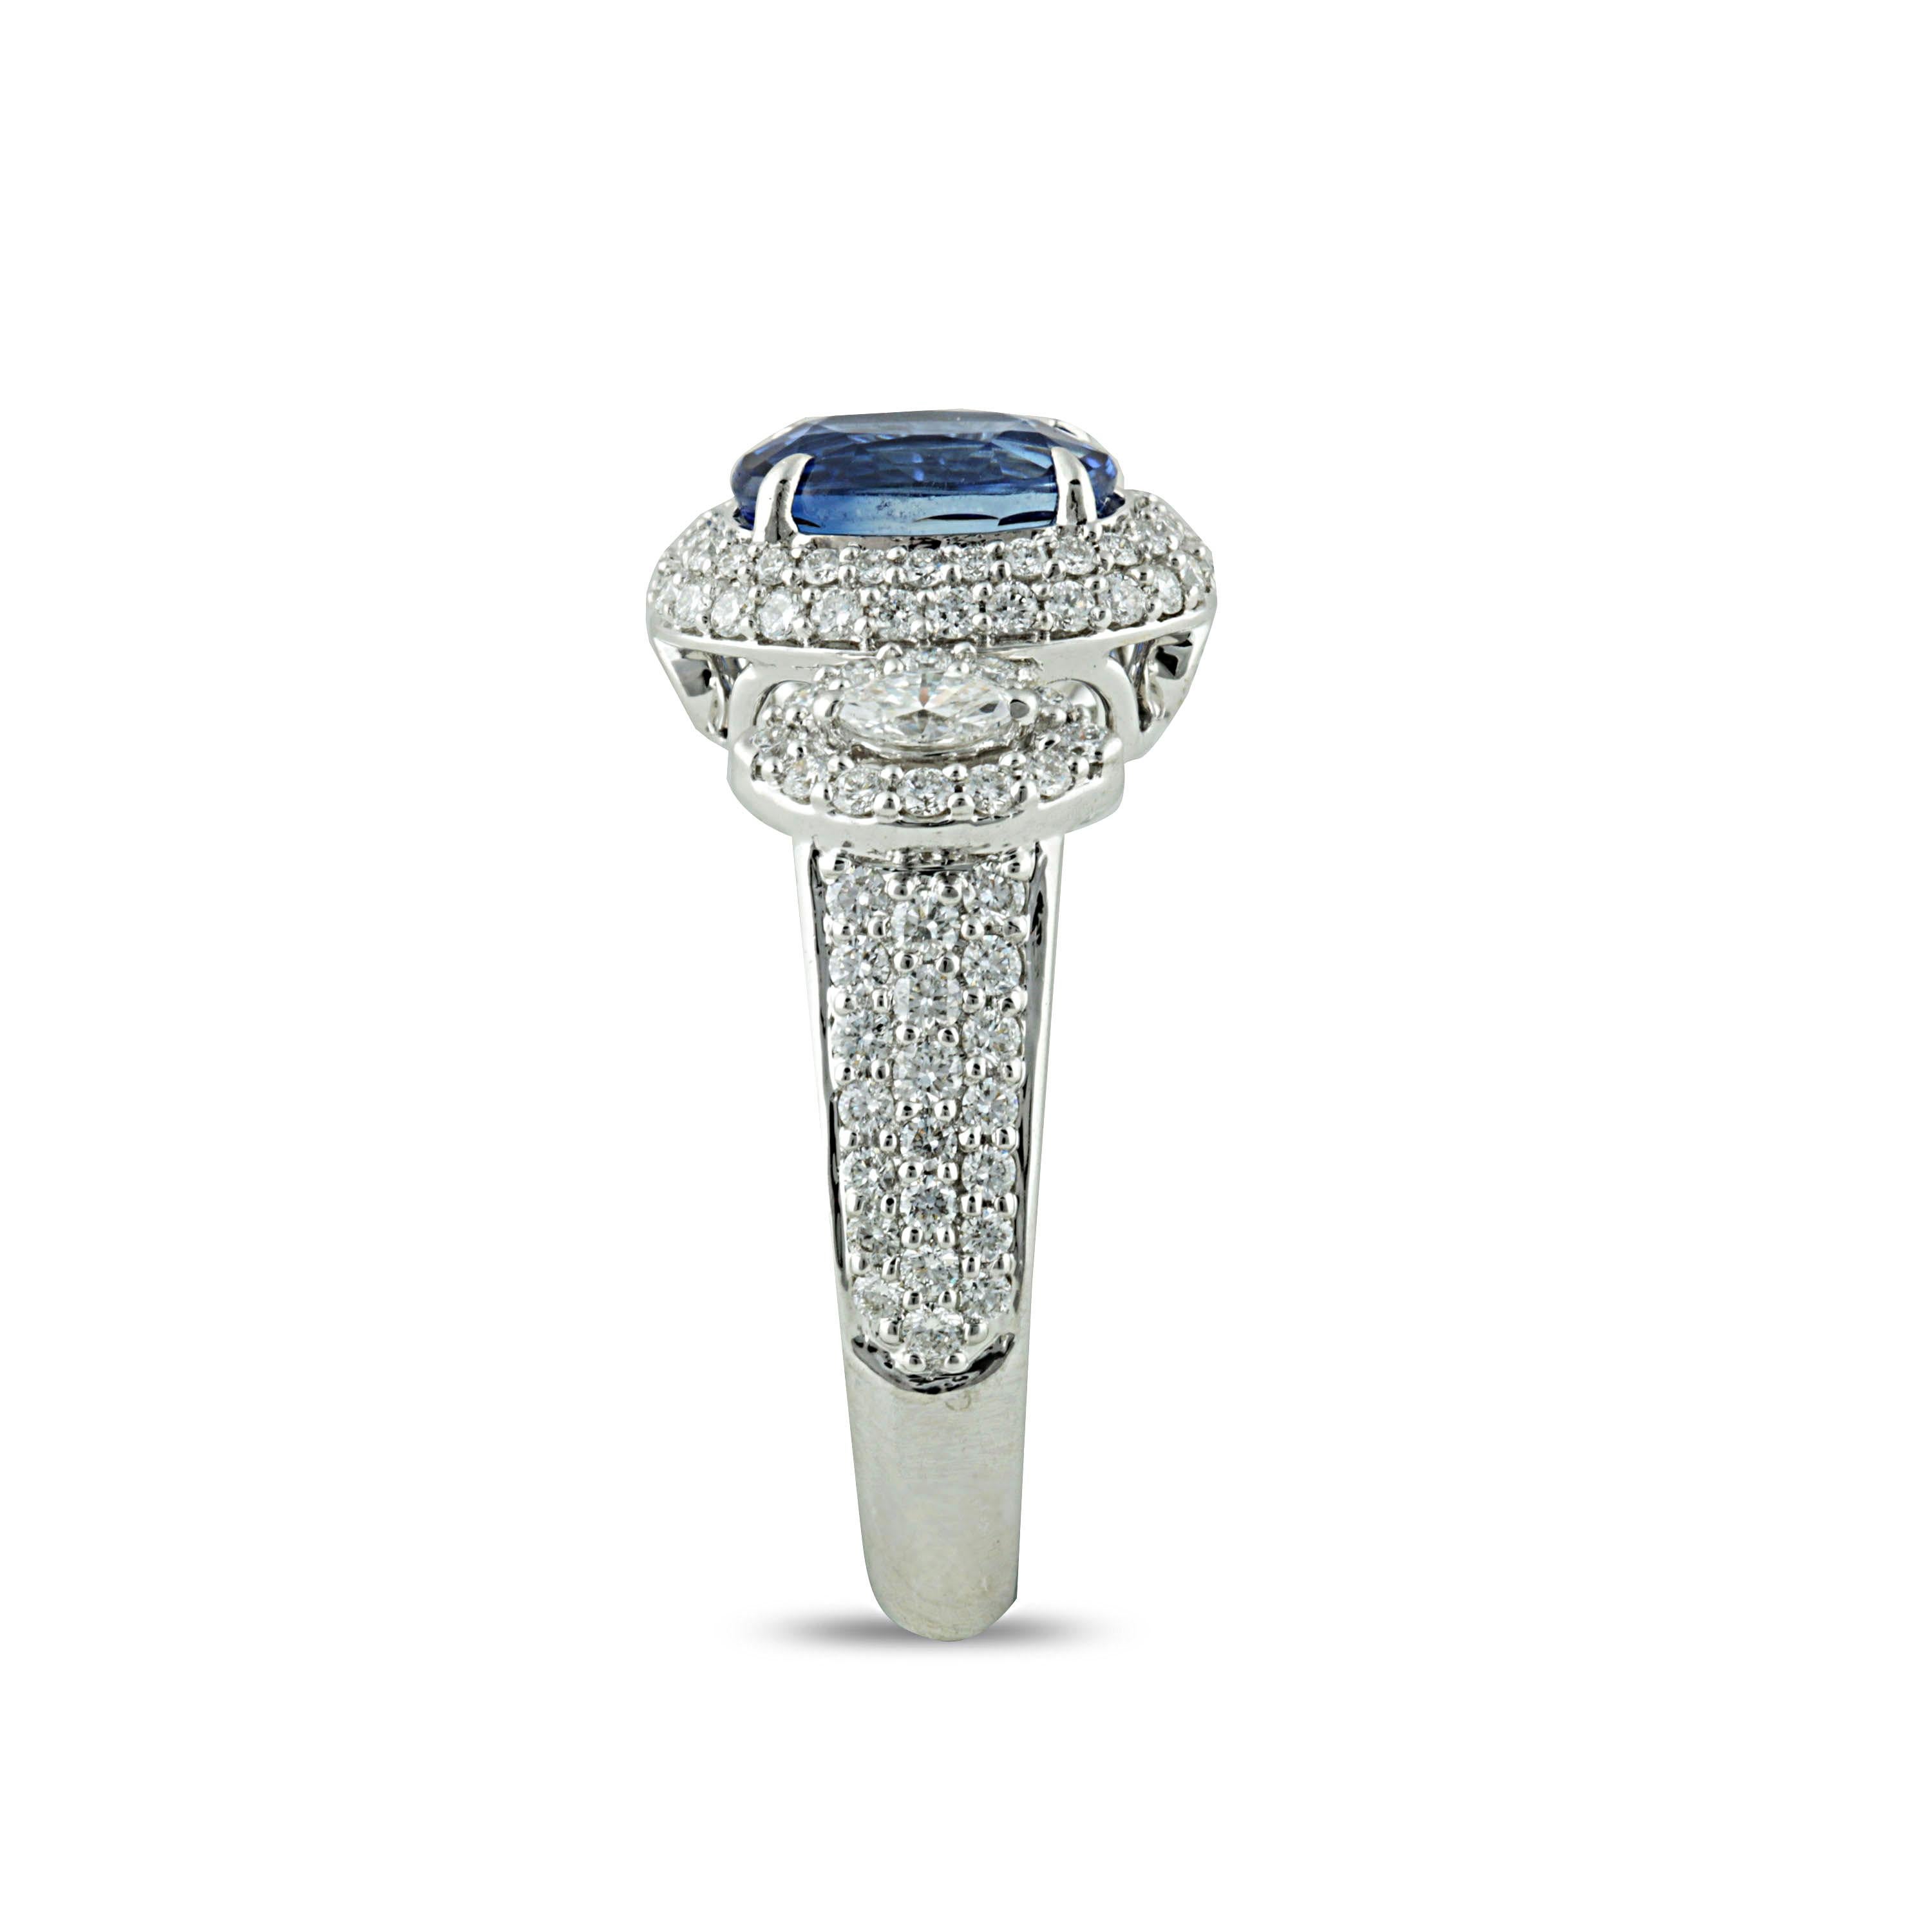 Contemporary Studio Rêves 1.68 Carat Blue Sapphire and Diamond Ring in 18 Karat White Gold